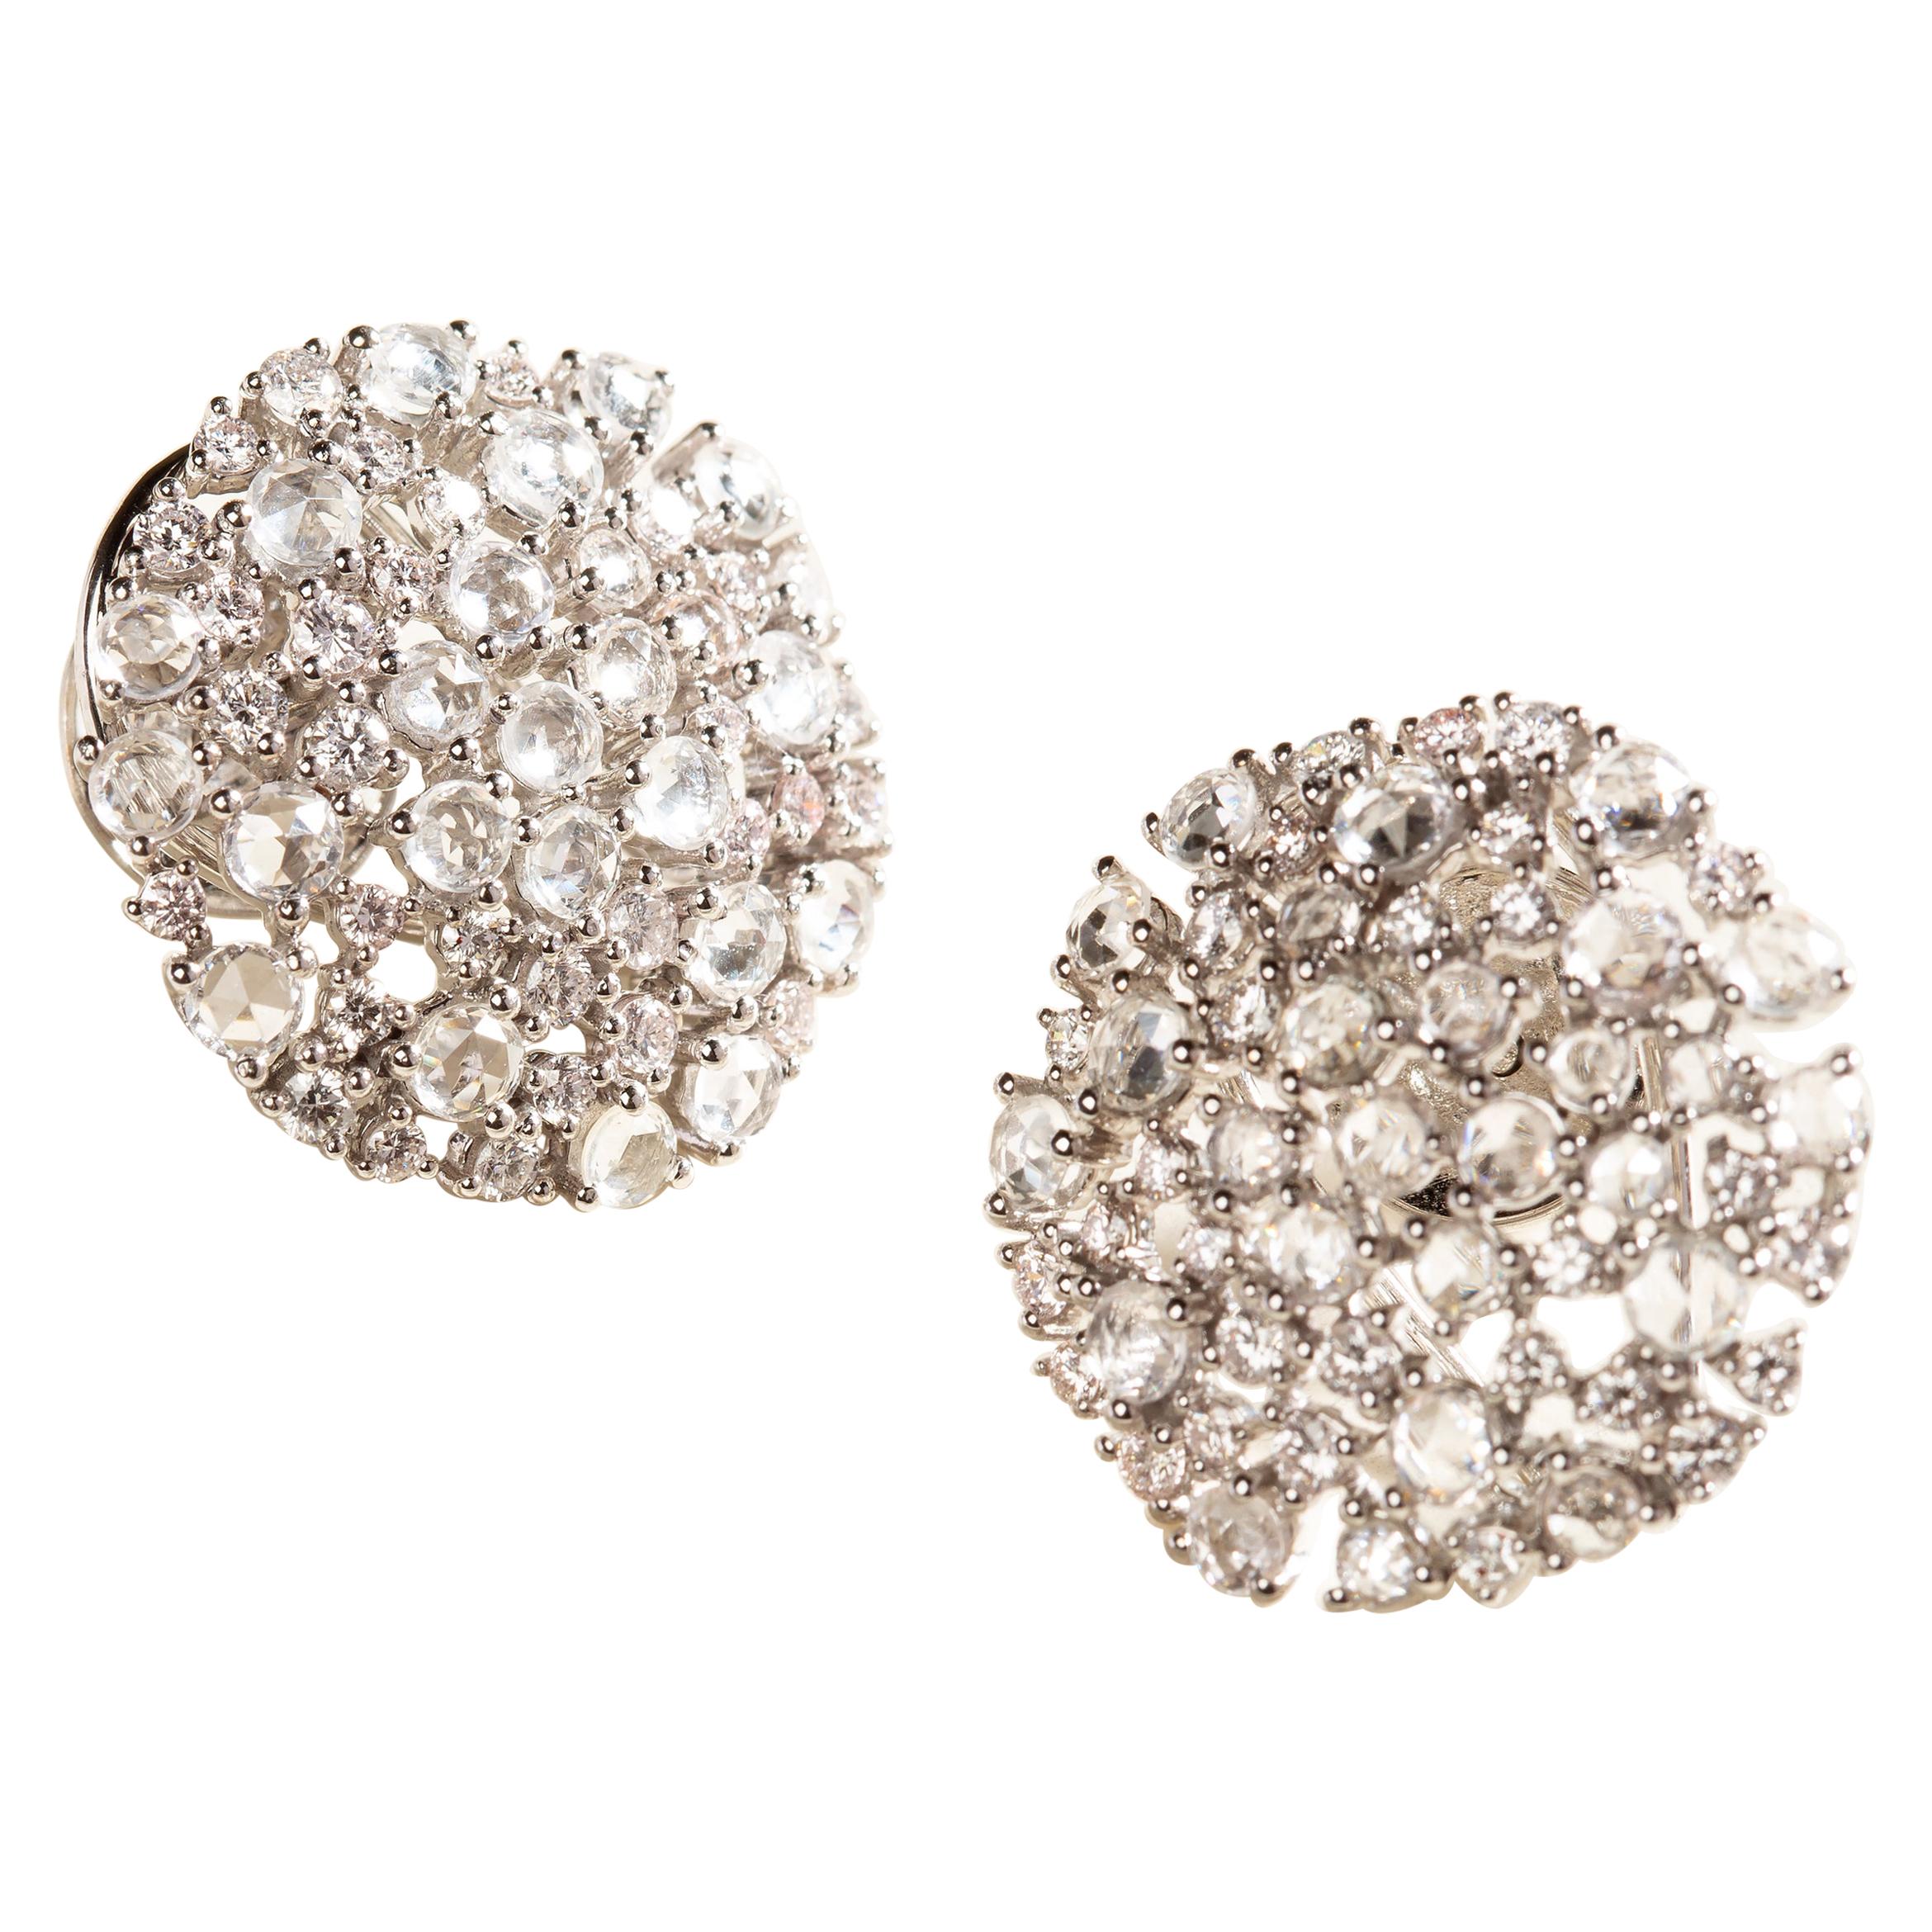 Venus Earrings 18 Karat White Gold with Diamonds and White Sapphires